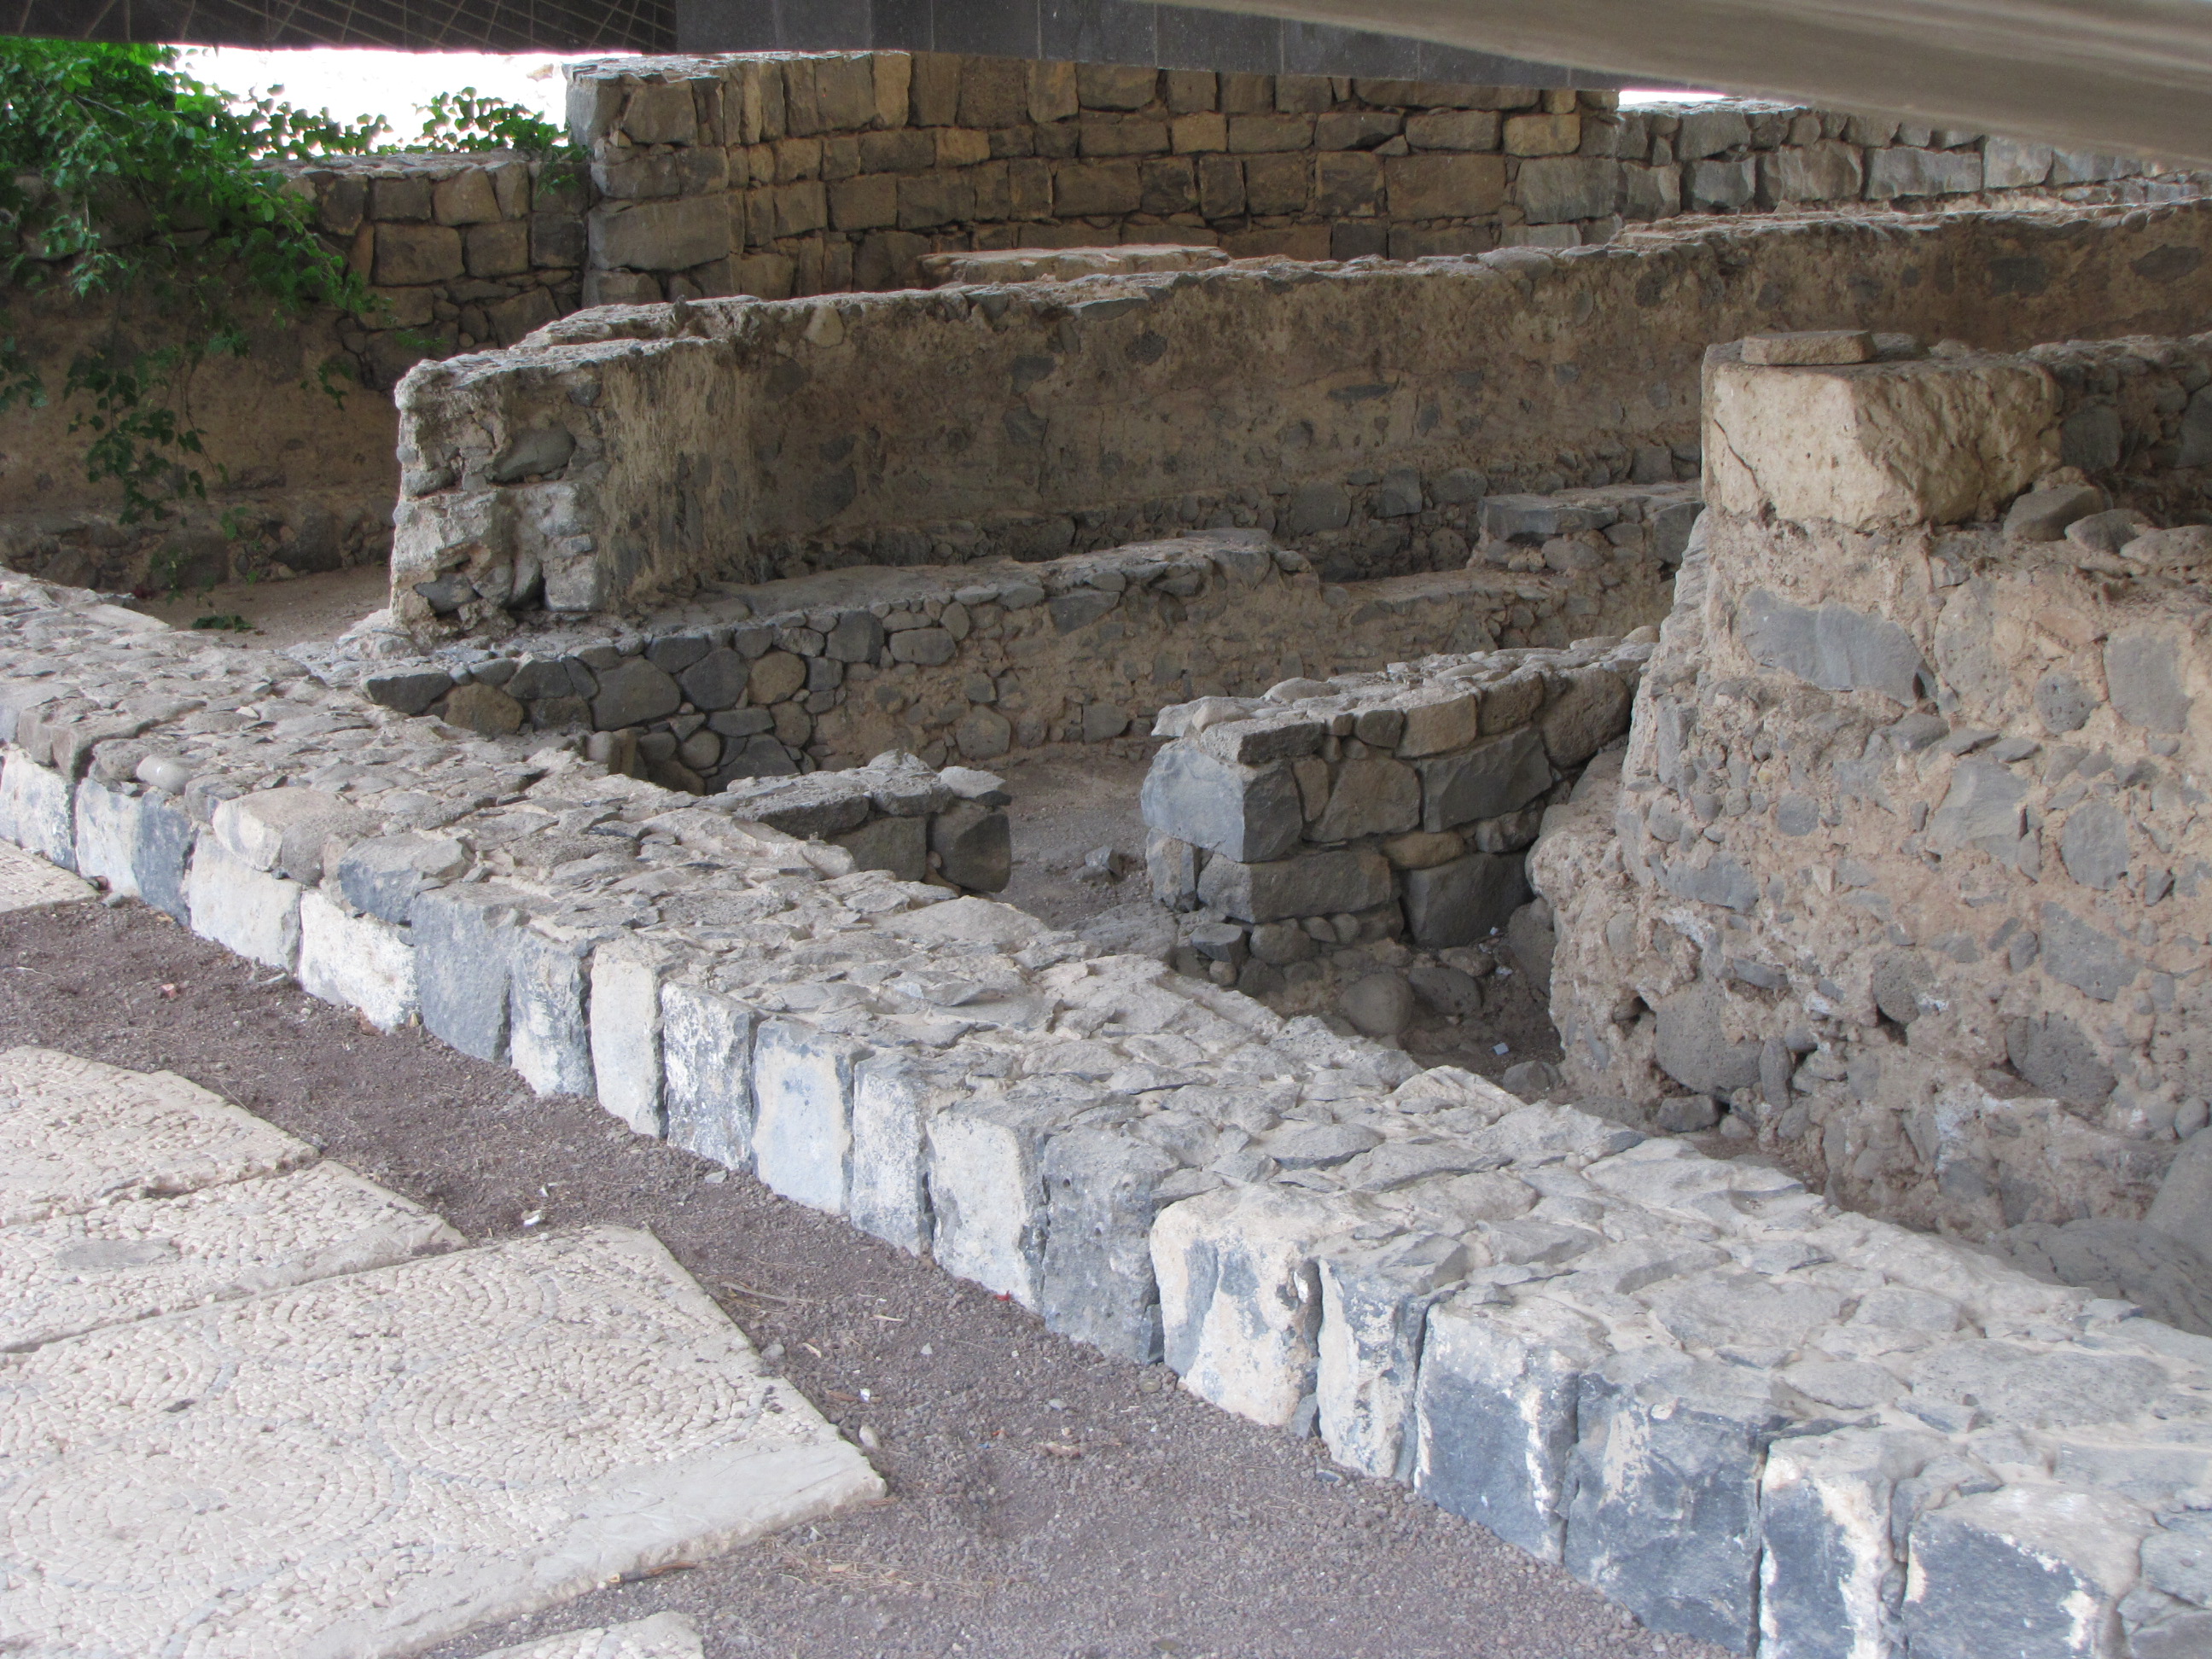 Peter's House in Capernaum